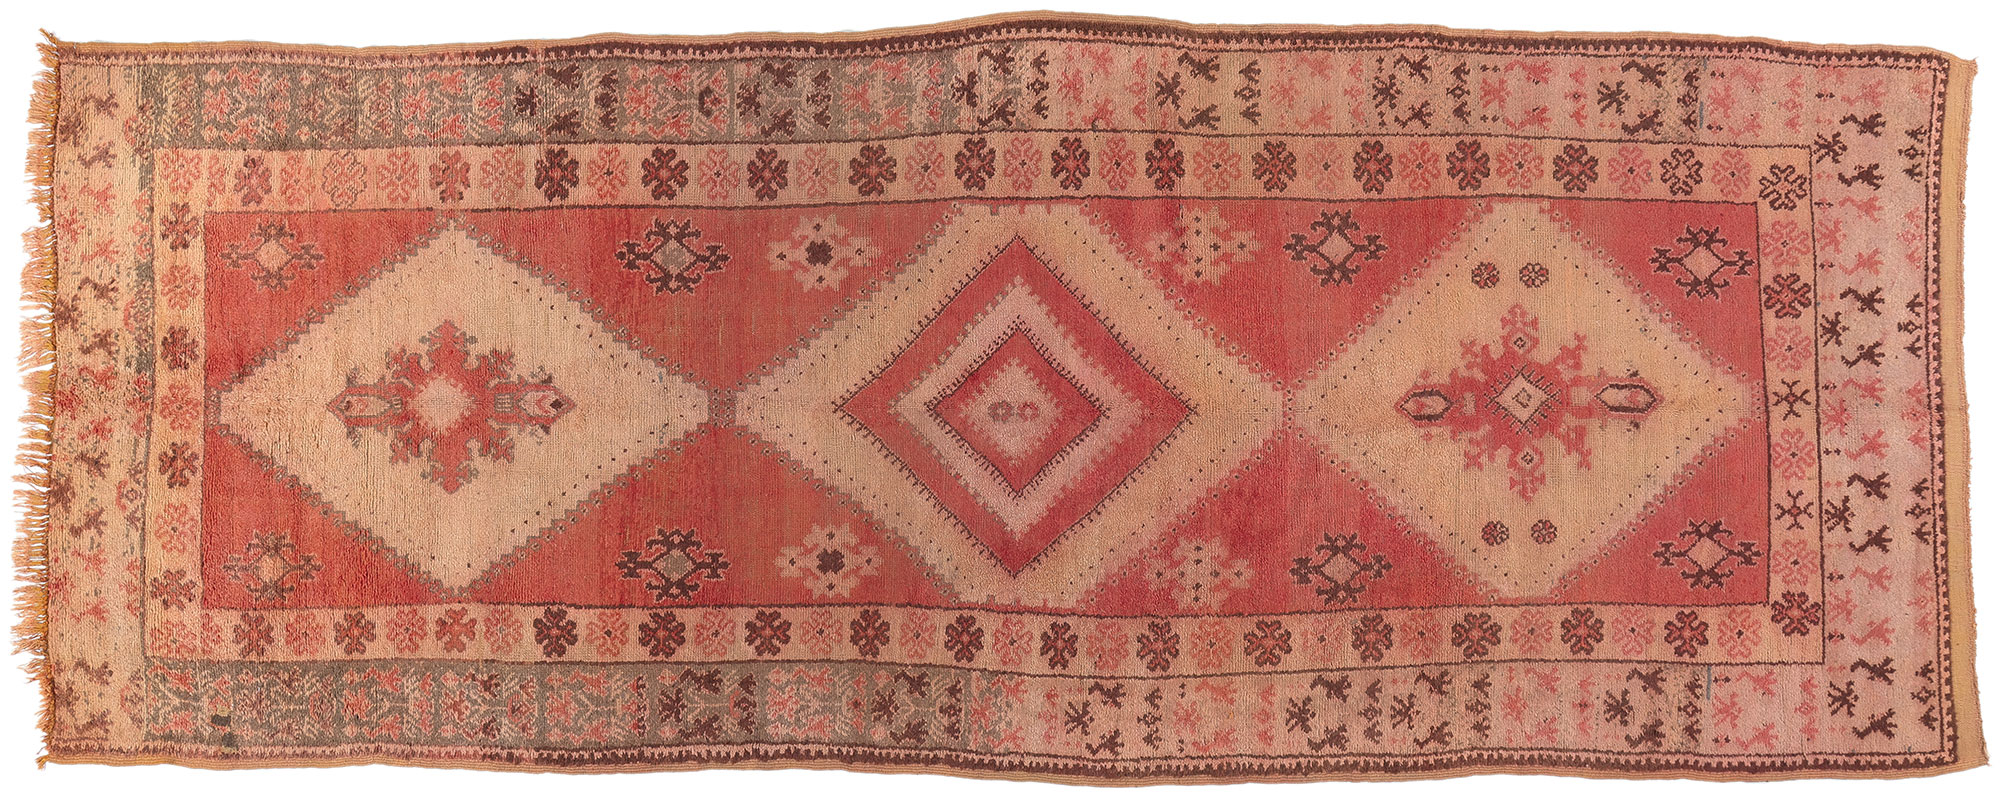 https://www.esmailirugs.com/images/detailed/85/Vintage-Moroccan-Rug-6x14-Boho-Chic-Jungalow-Berber-Tribe-Carpet-20194-.jpg